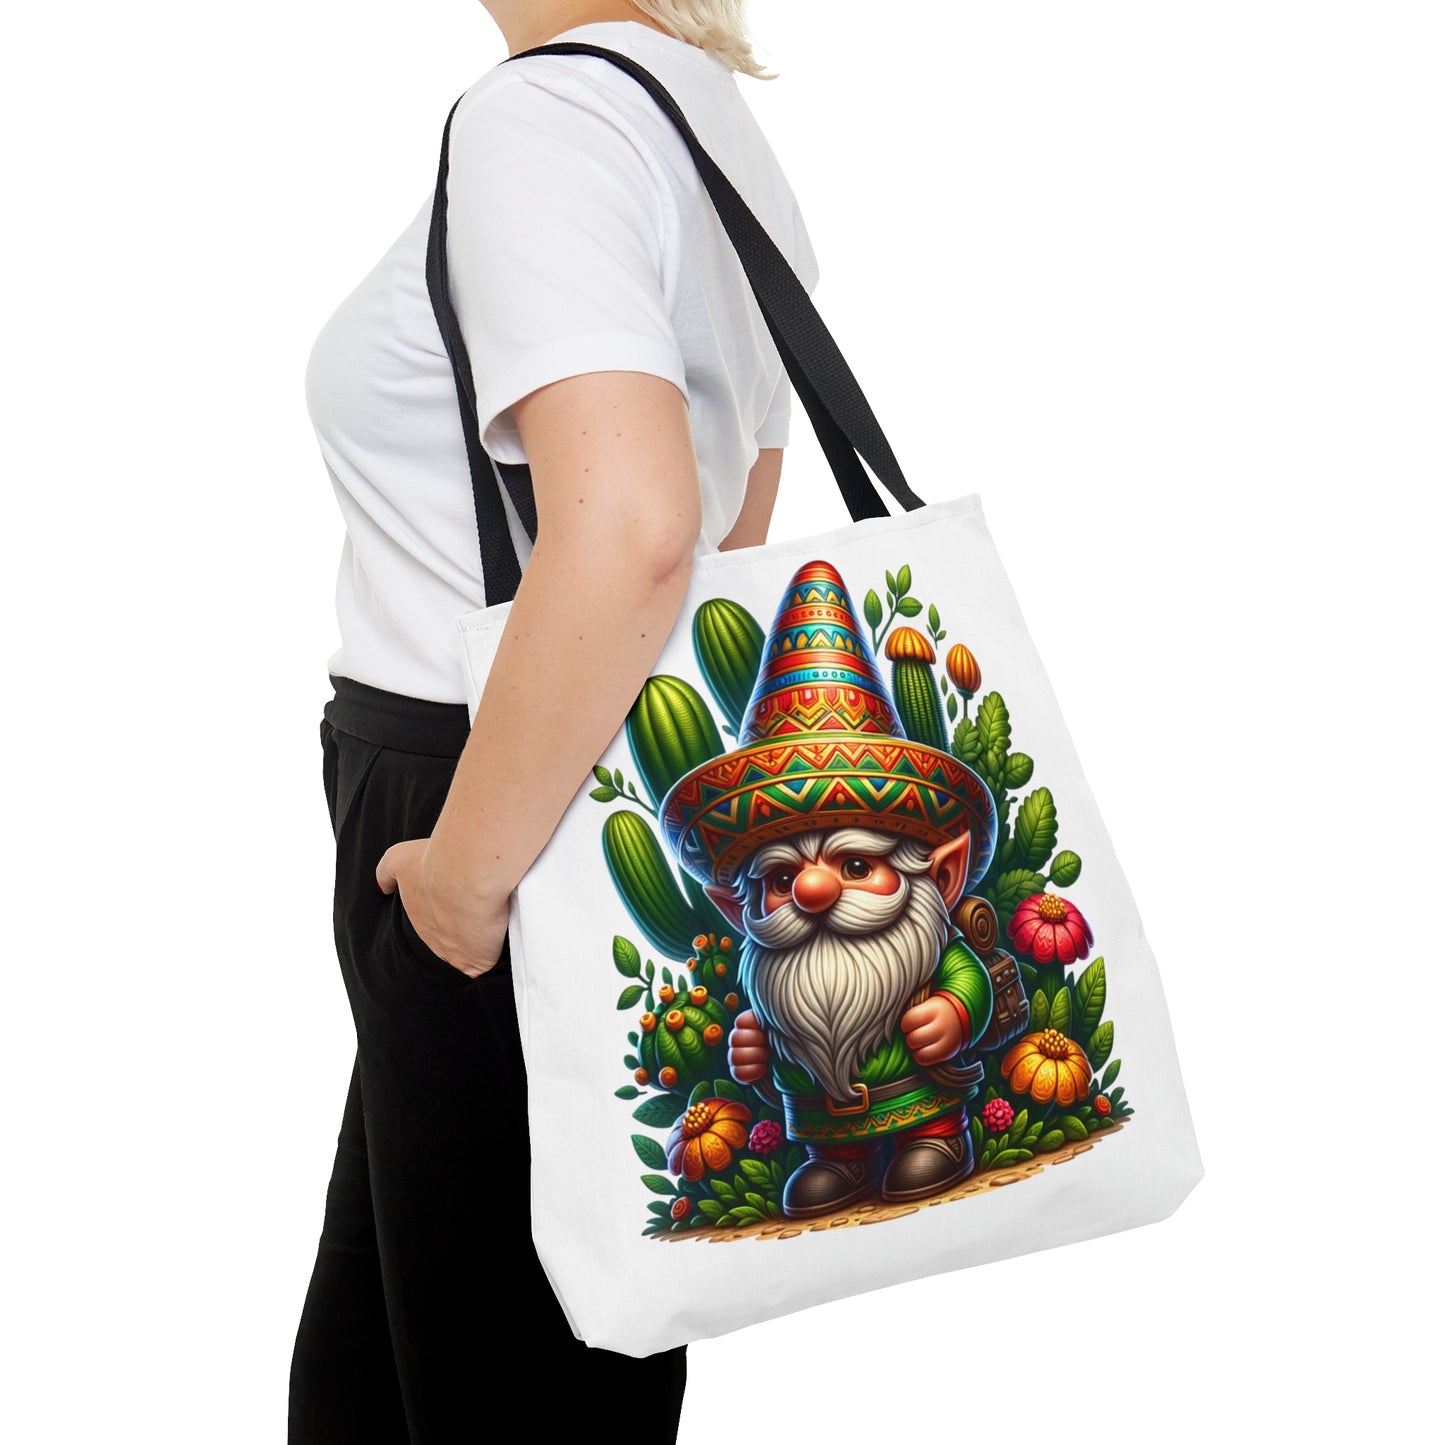 Spanish Gnome - Tote Bag